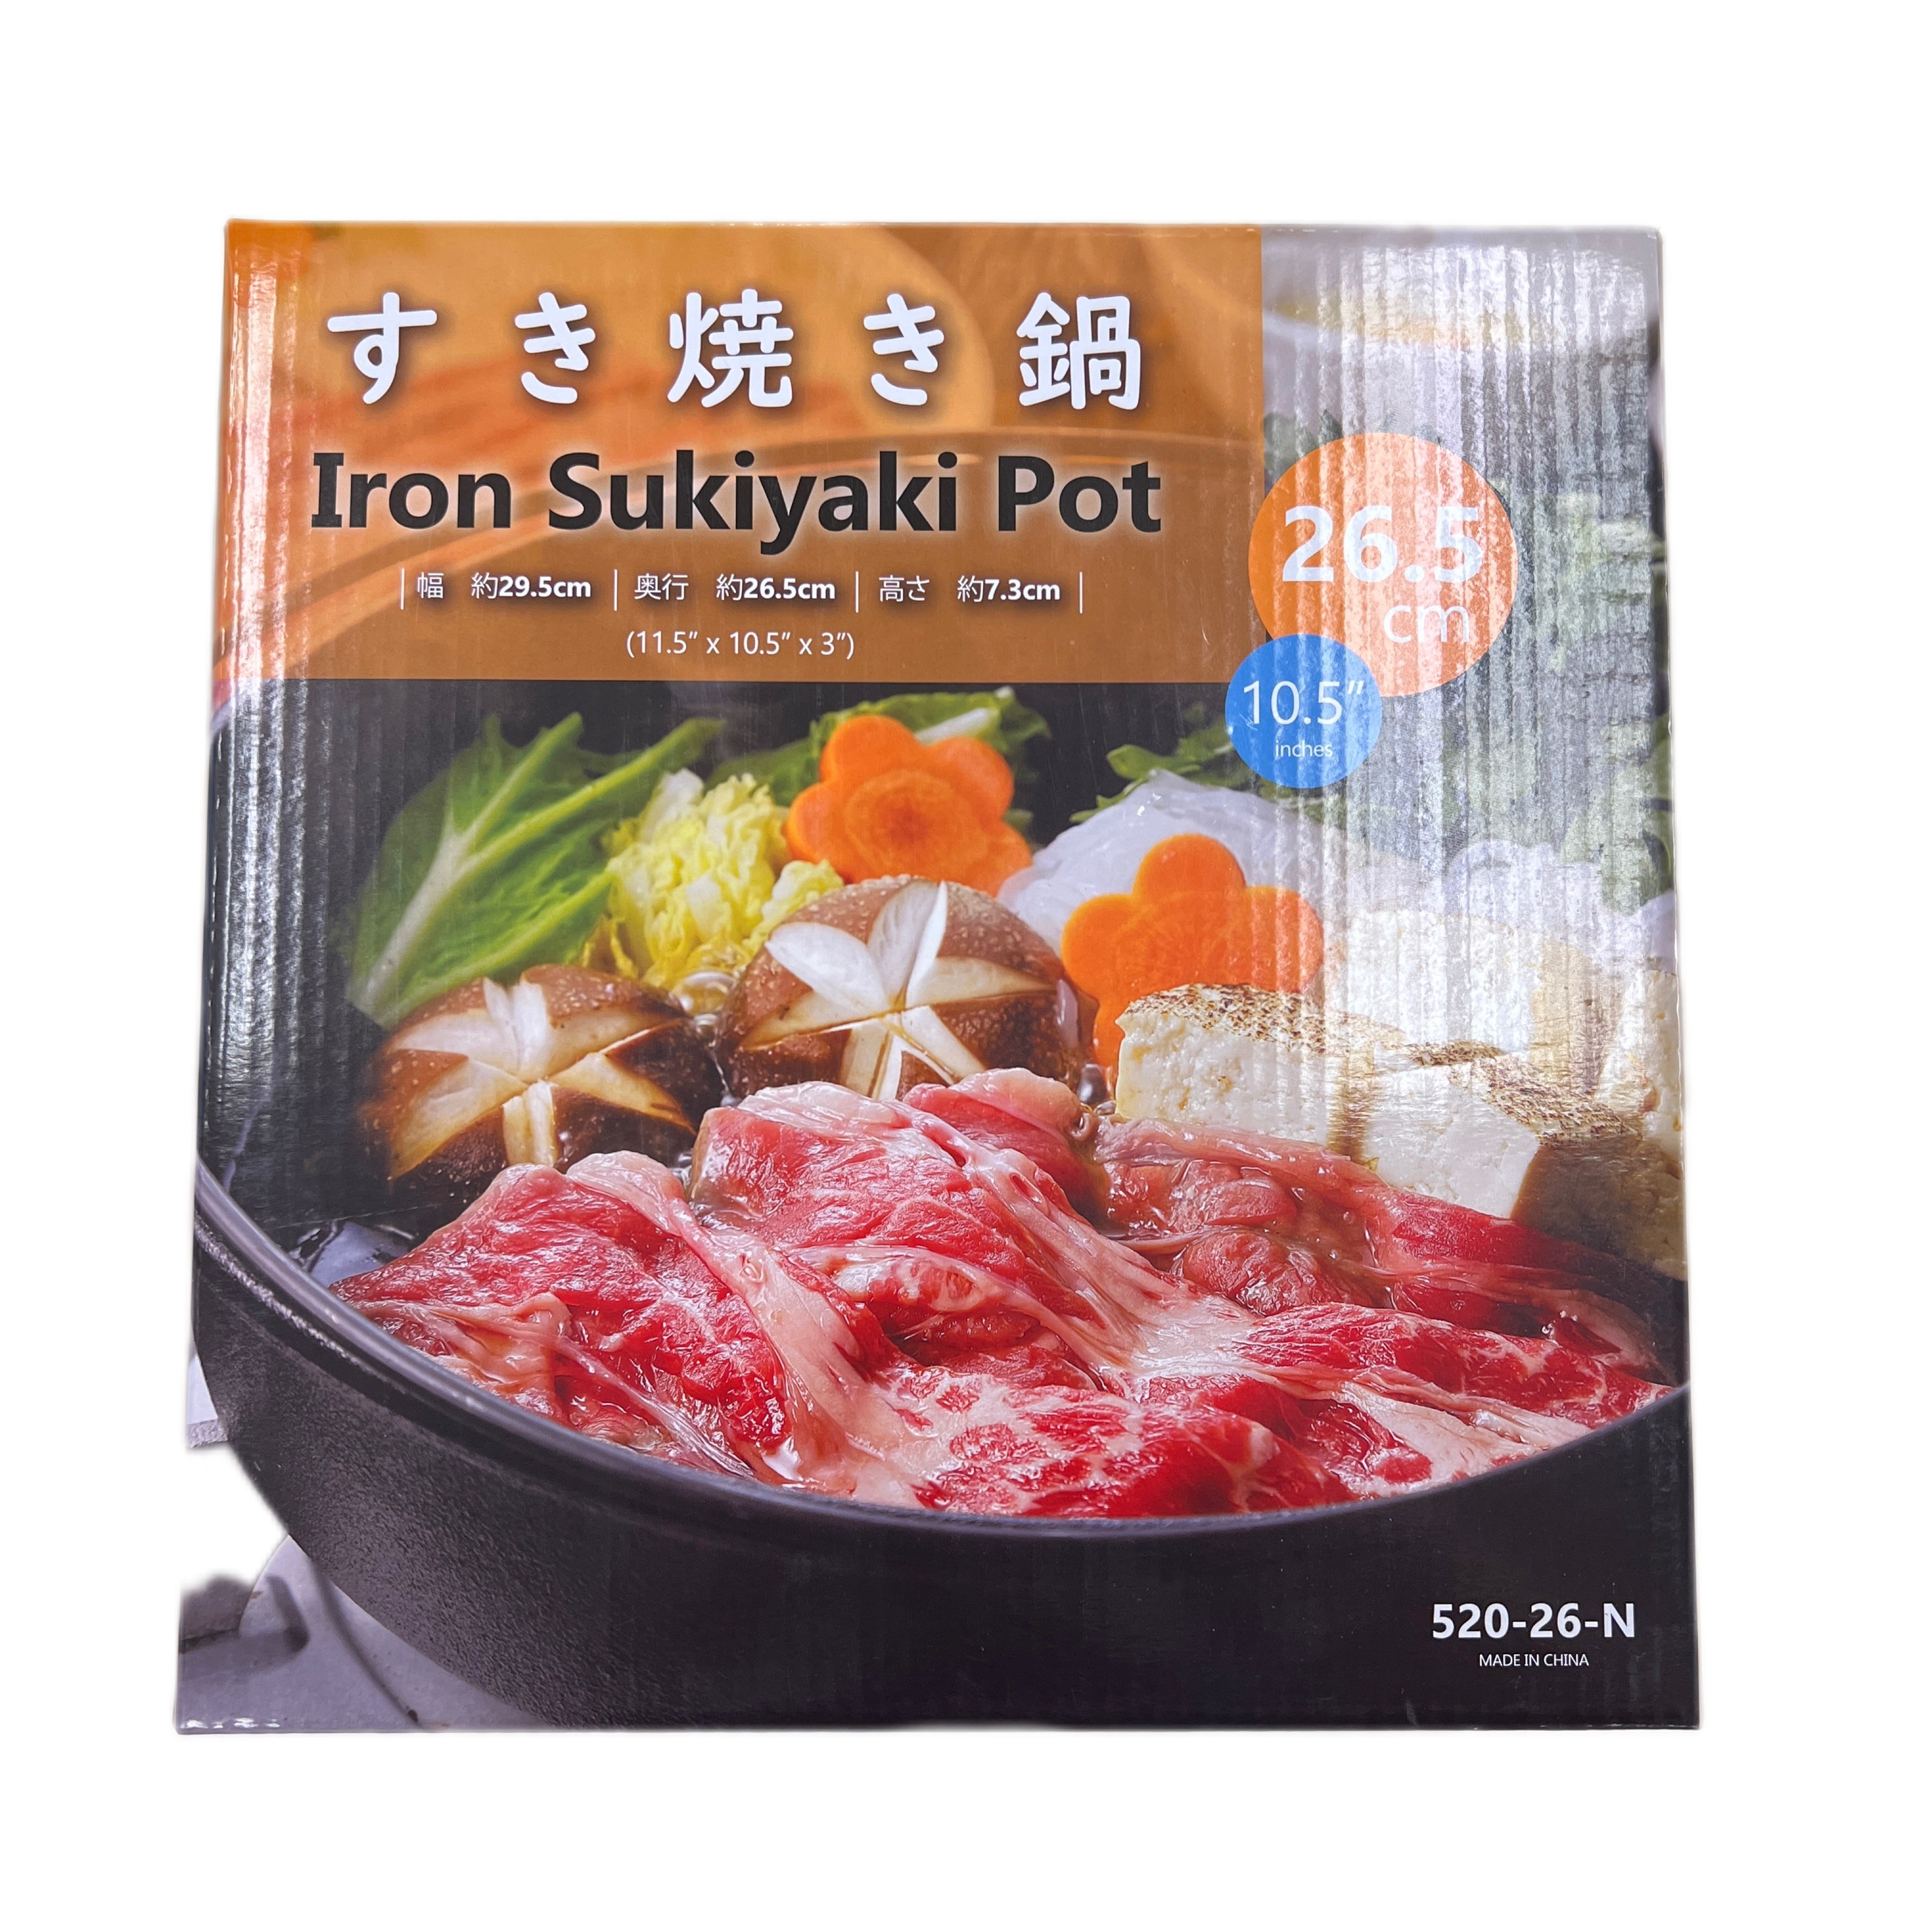 Iron Sukiyaki Pot